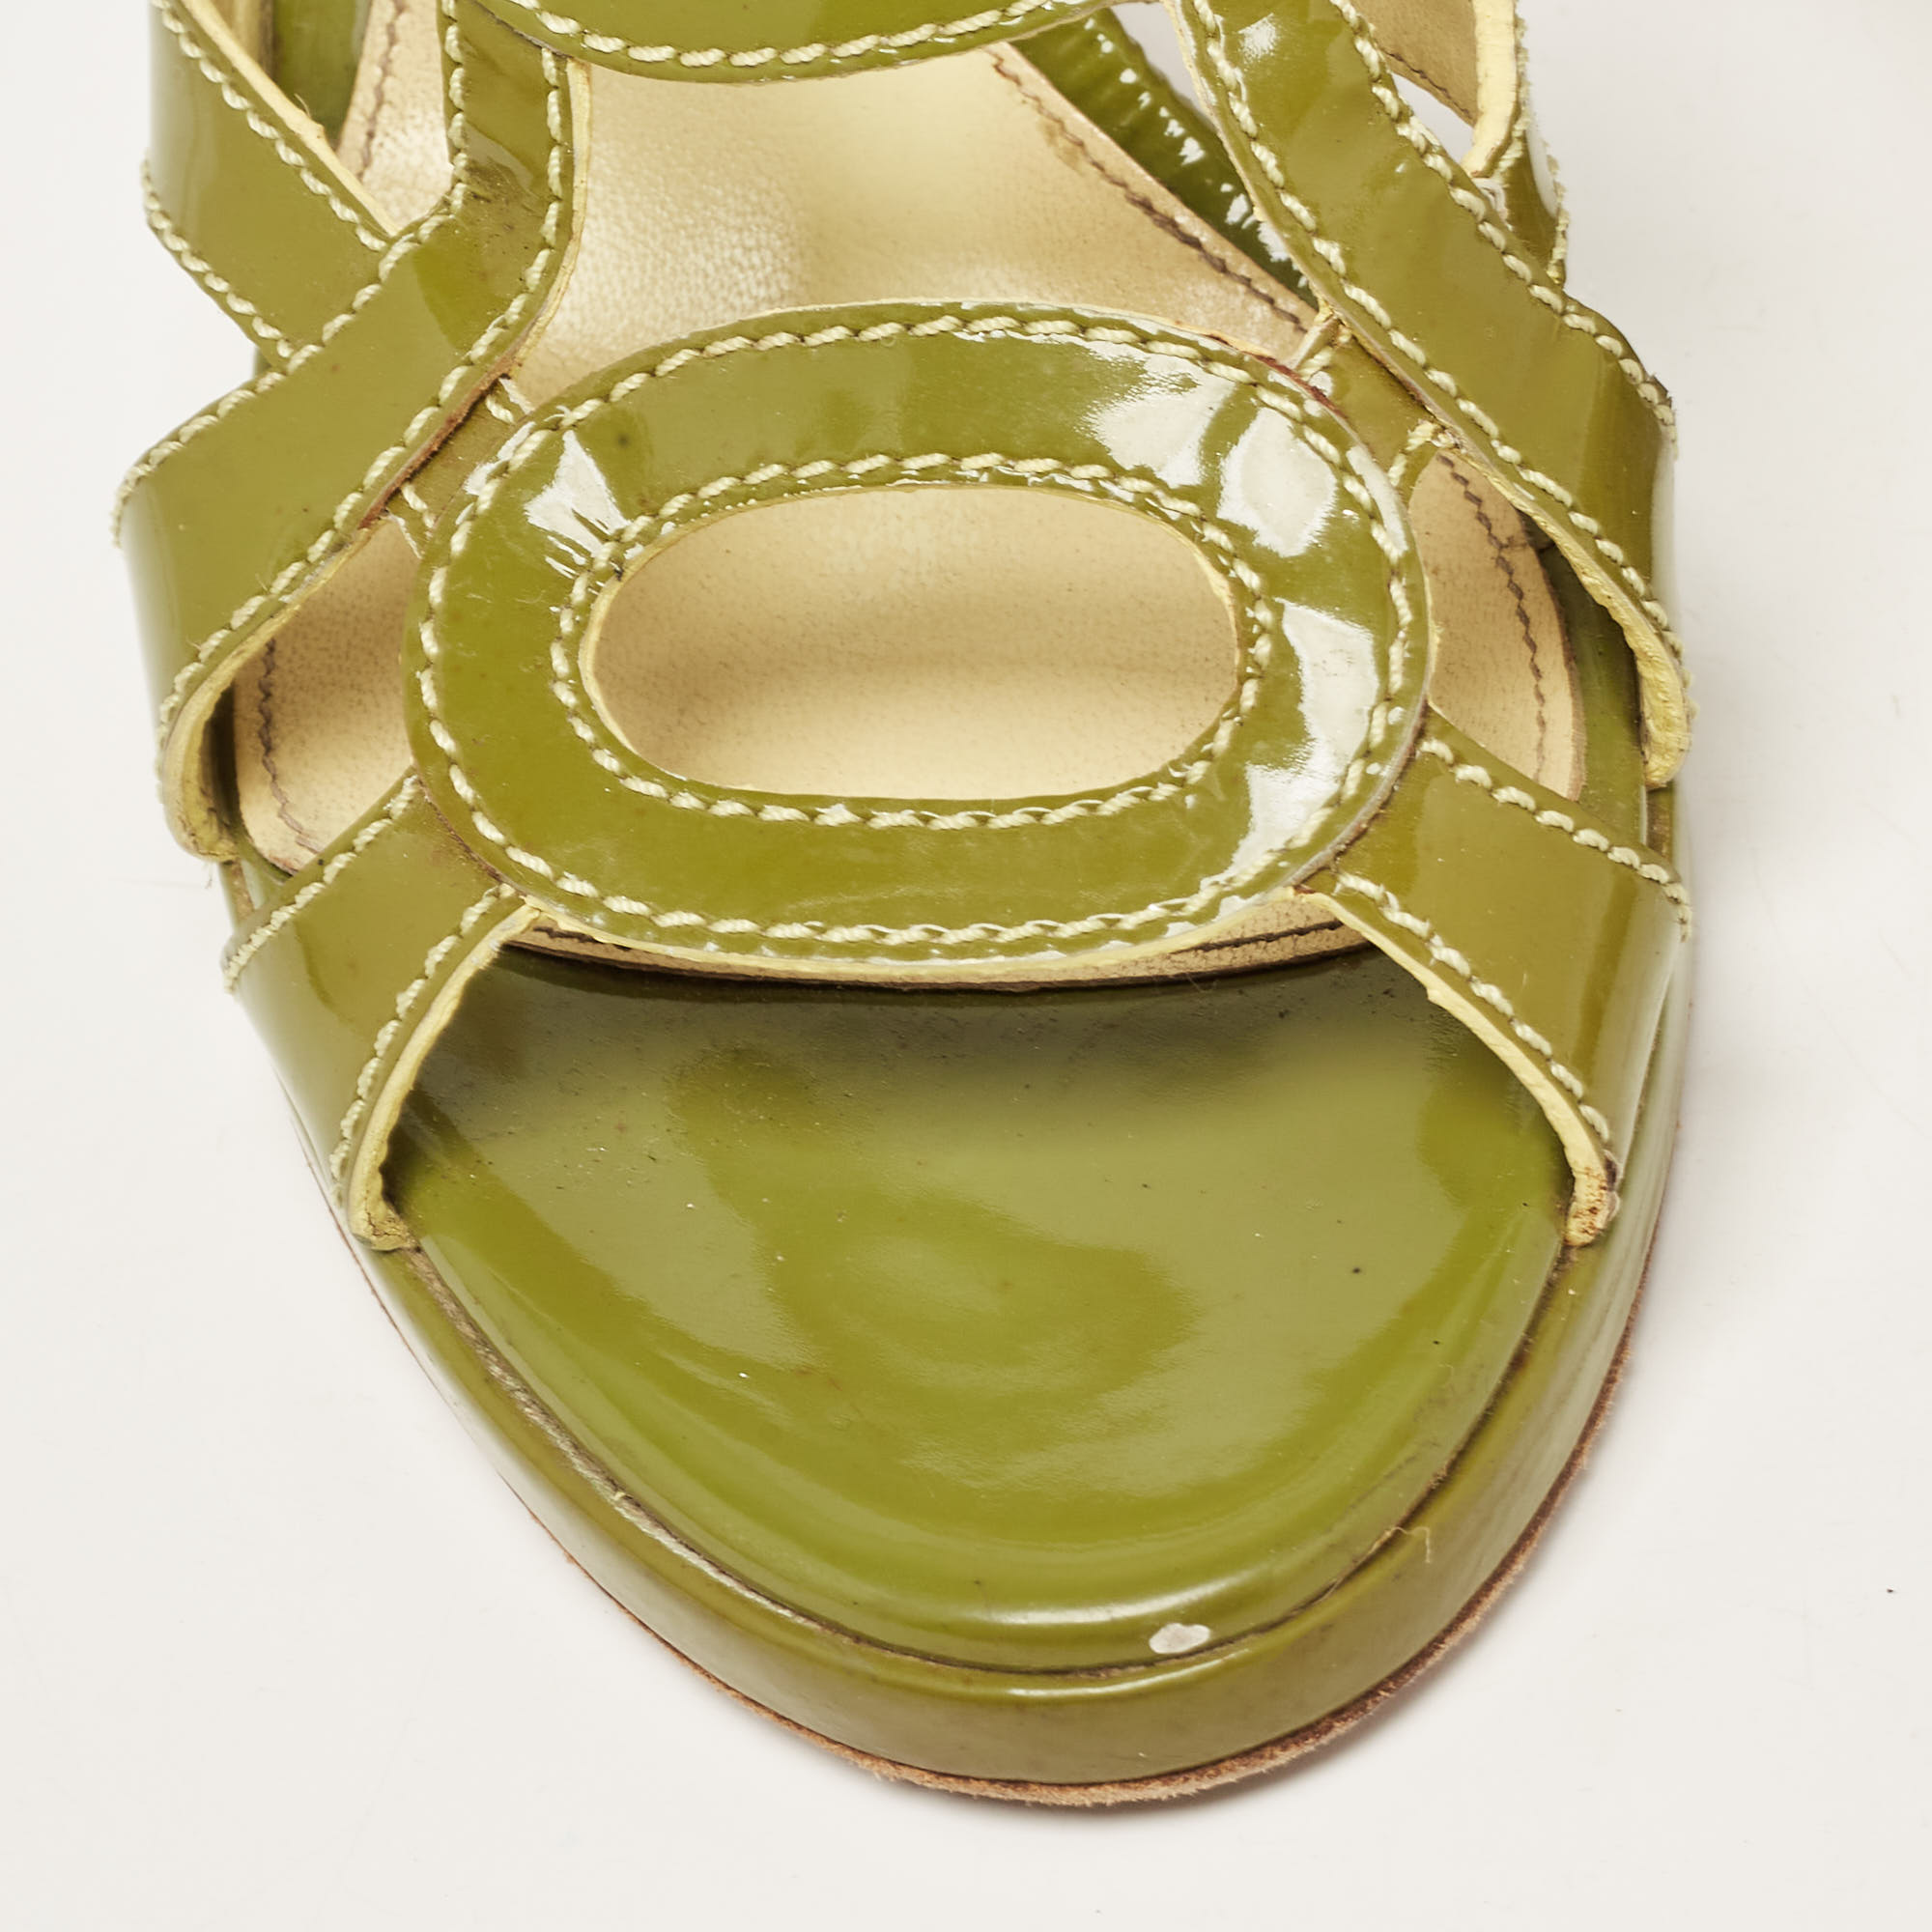 Sergio Rossi Green Patent Leather Platform Strappy Slide Sandals Size 39